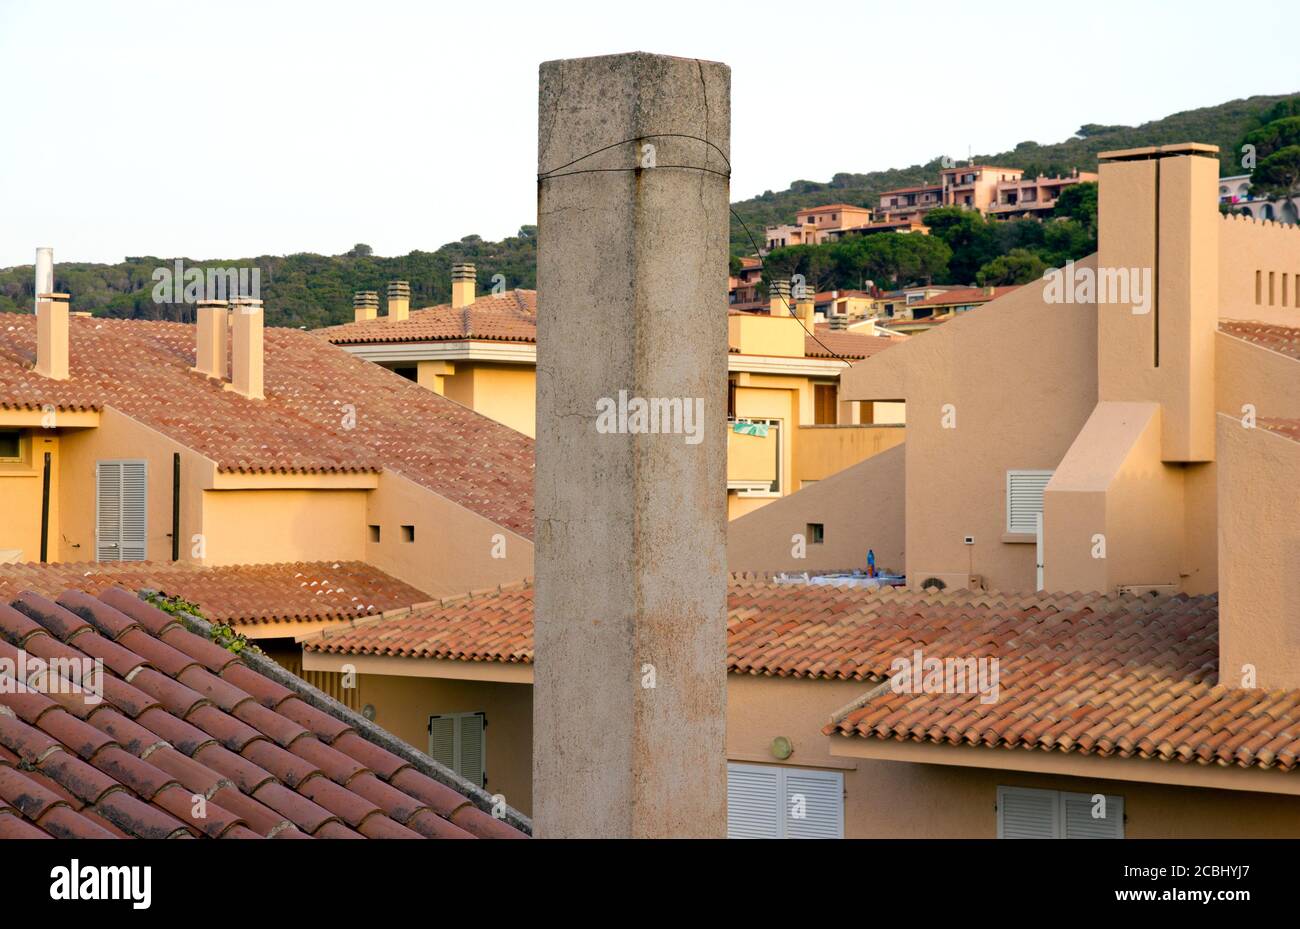 Palau appartamenti in Sardegna Foto Stock